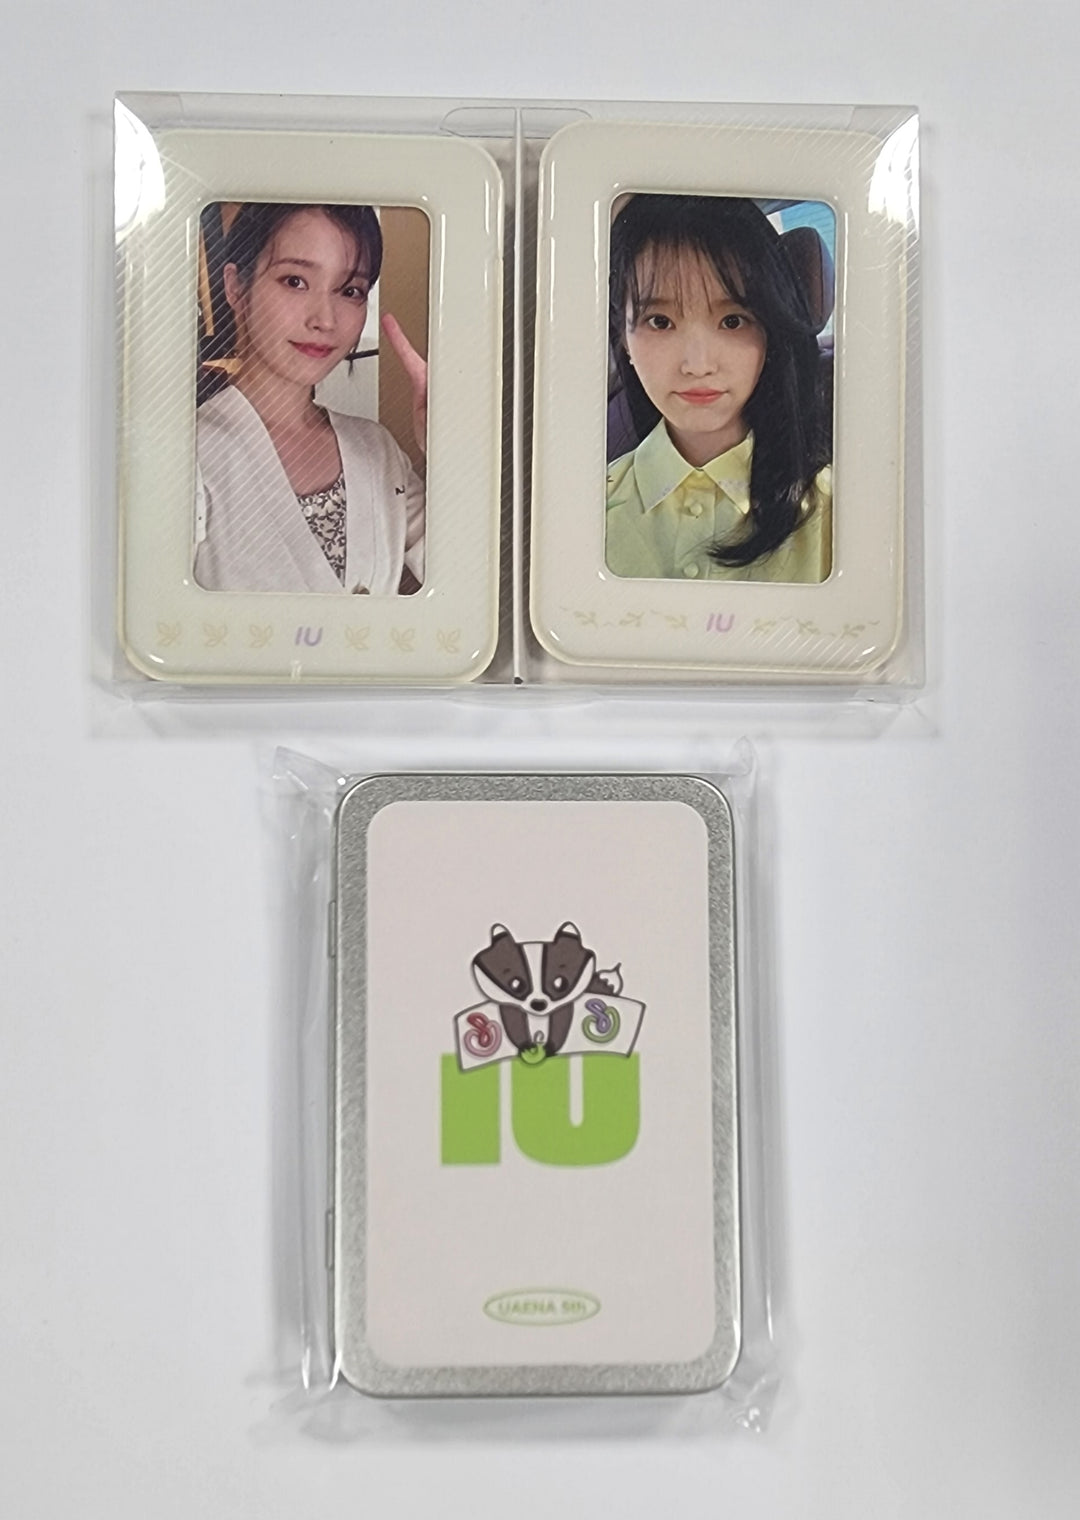 IU "UAENA 5th" - Official MD [Photocard set, Photo stand set]